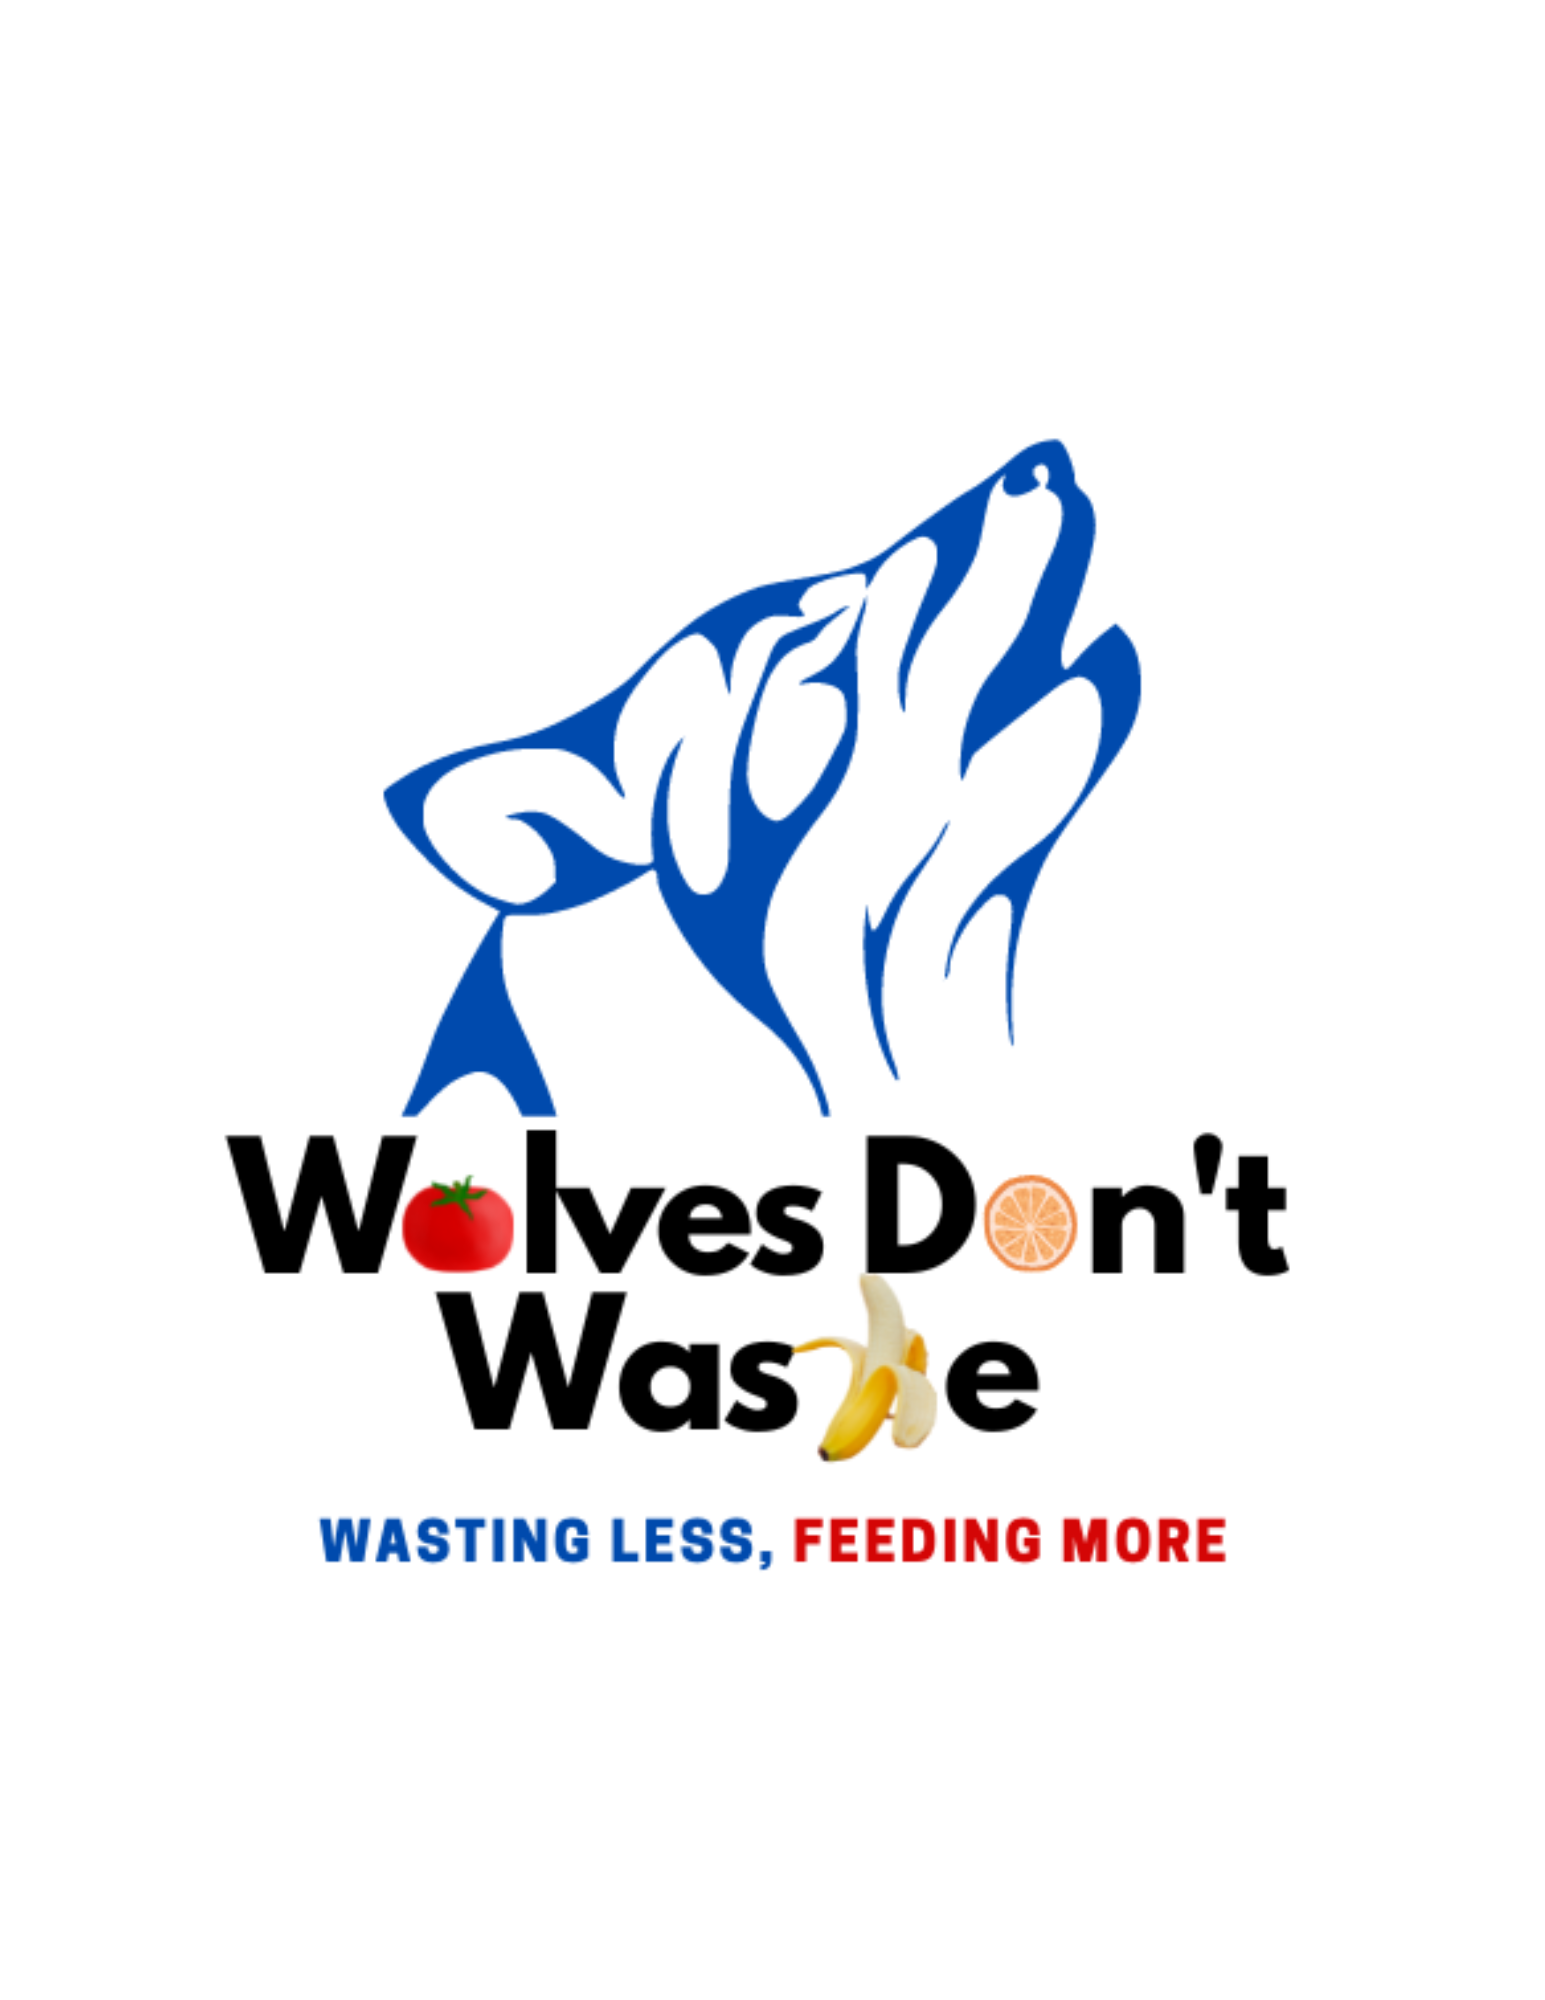 Wolves Don't Waste logo.